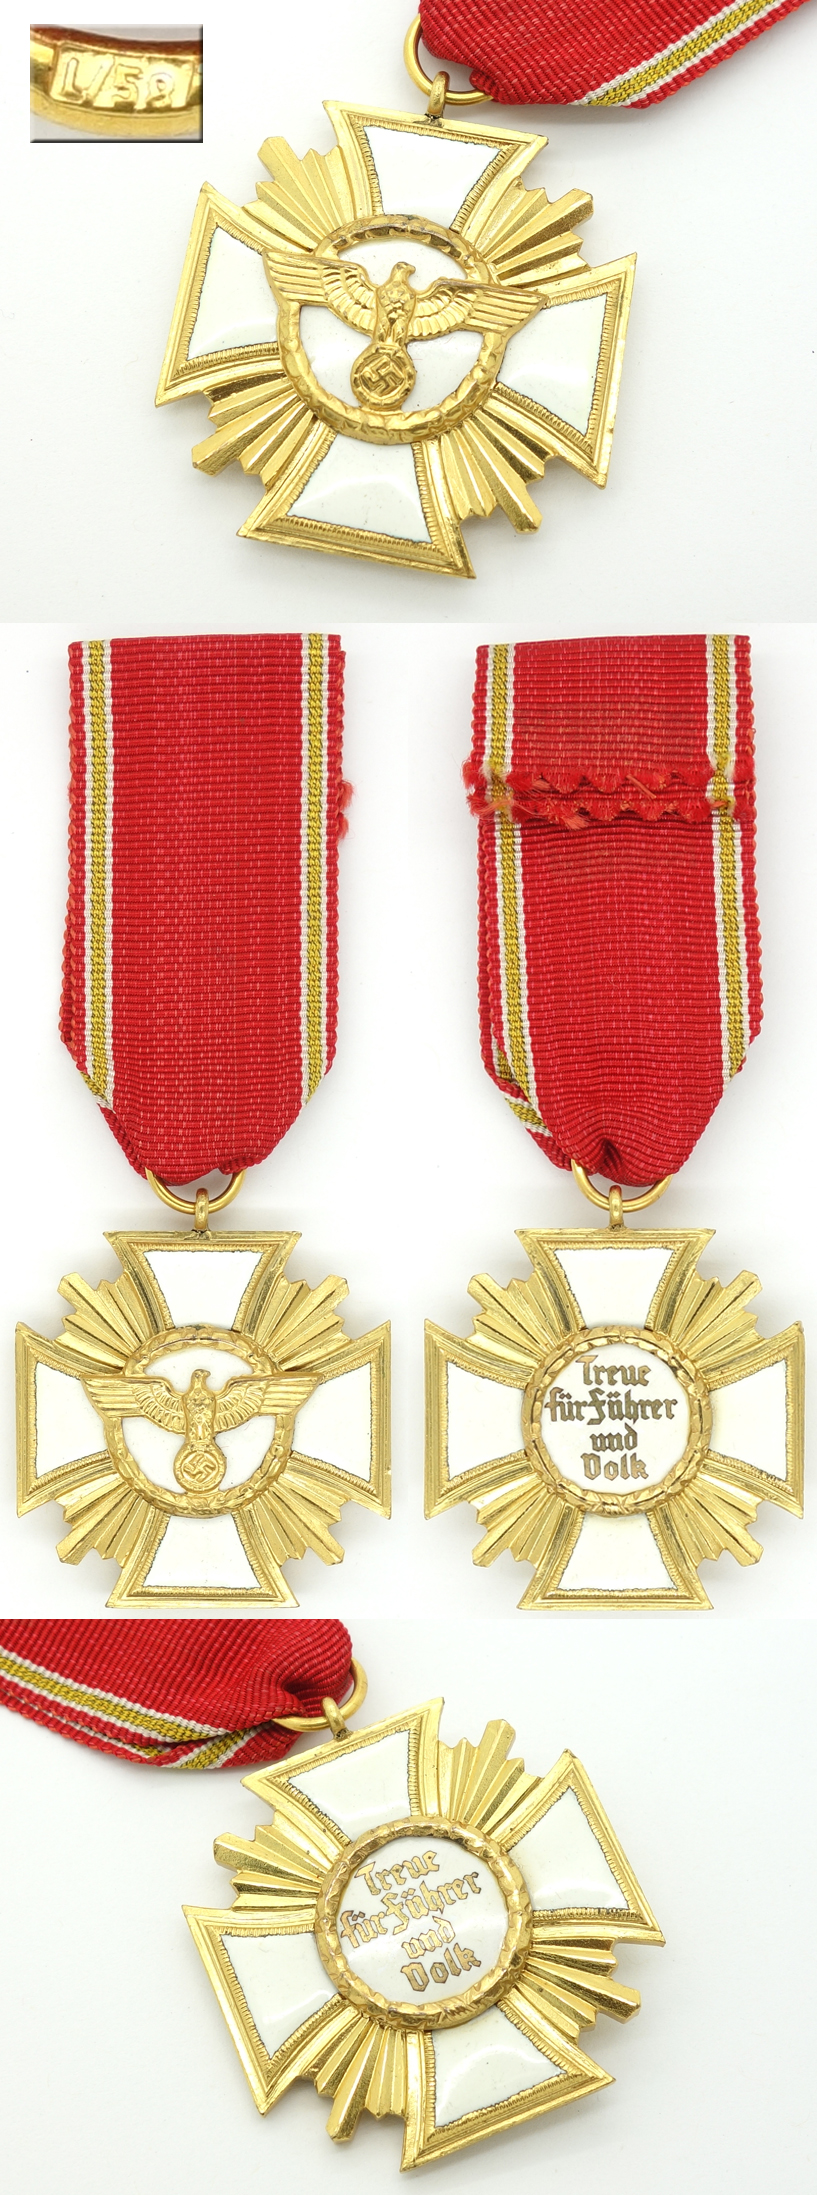 Early Post-War - 25 Year NSDAP Long Service Award by L/58